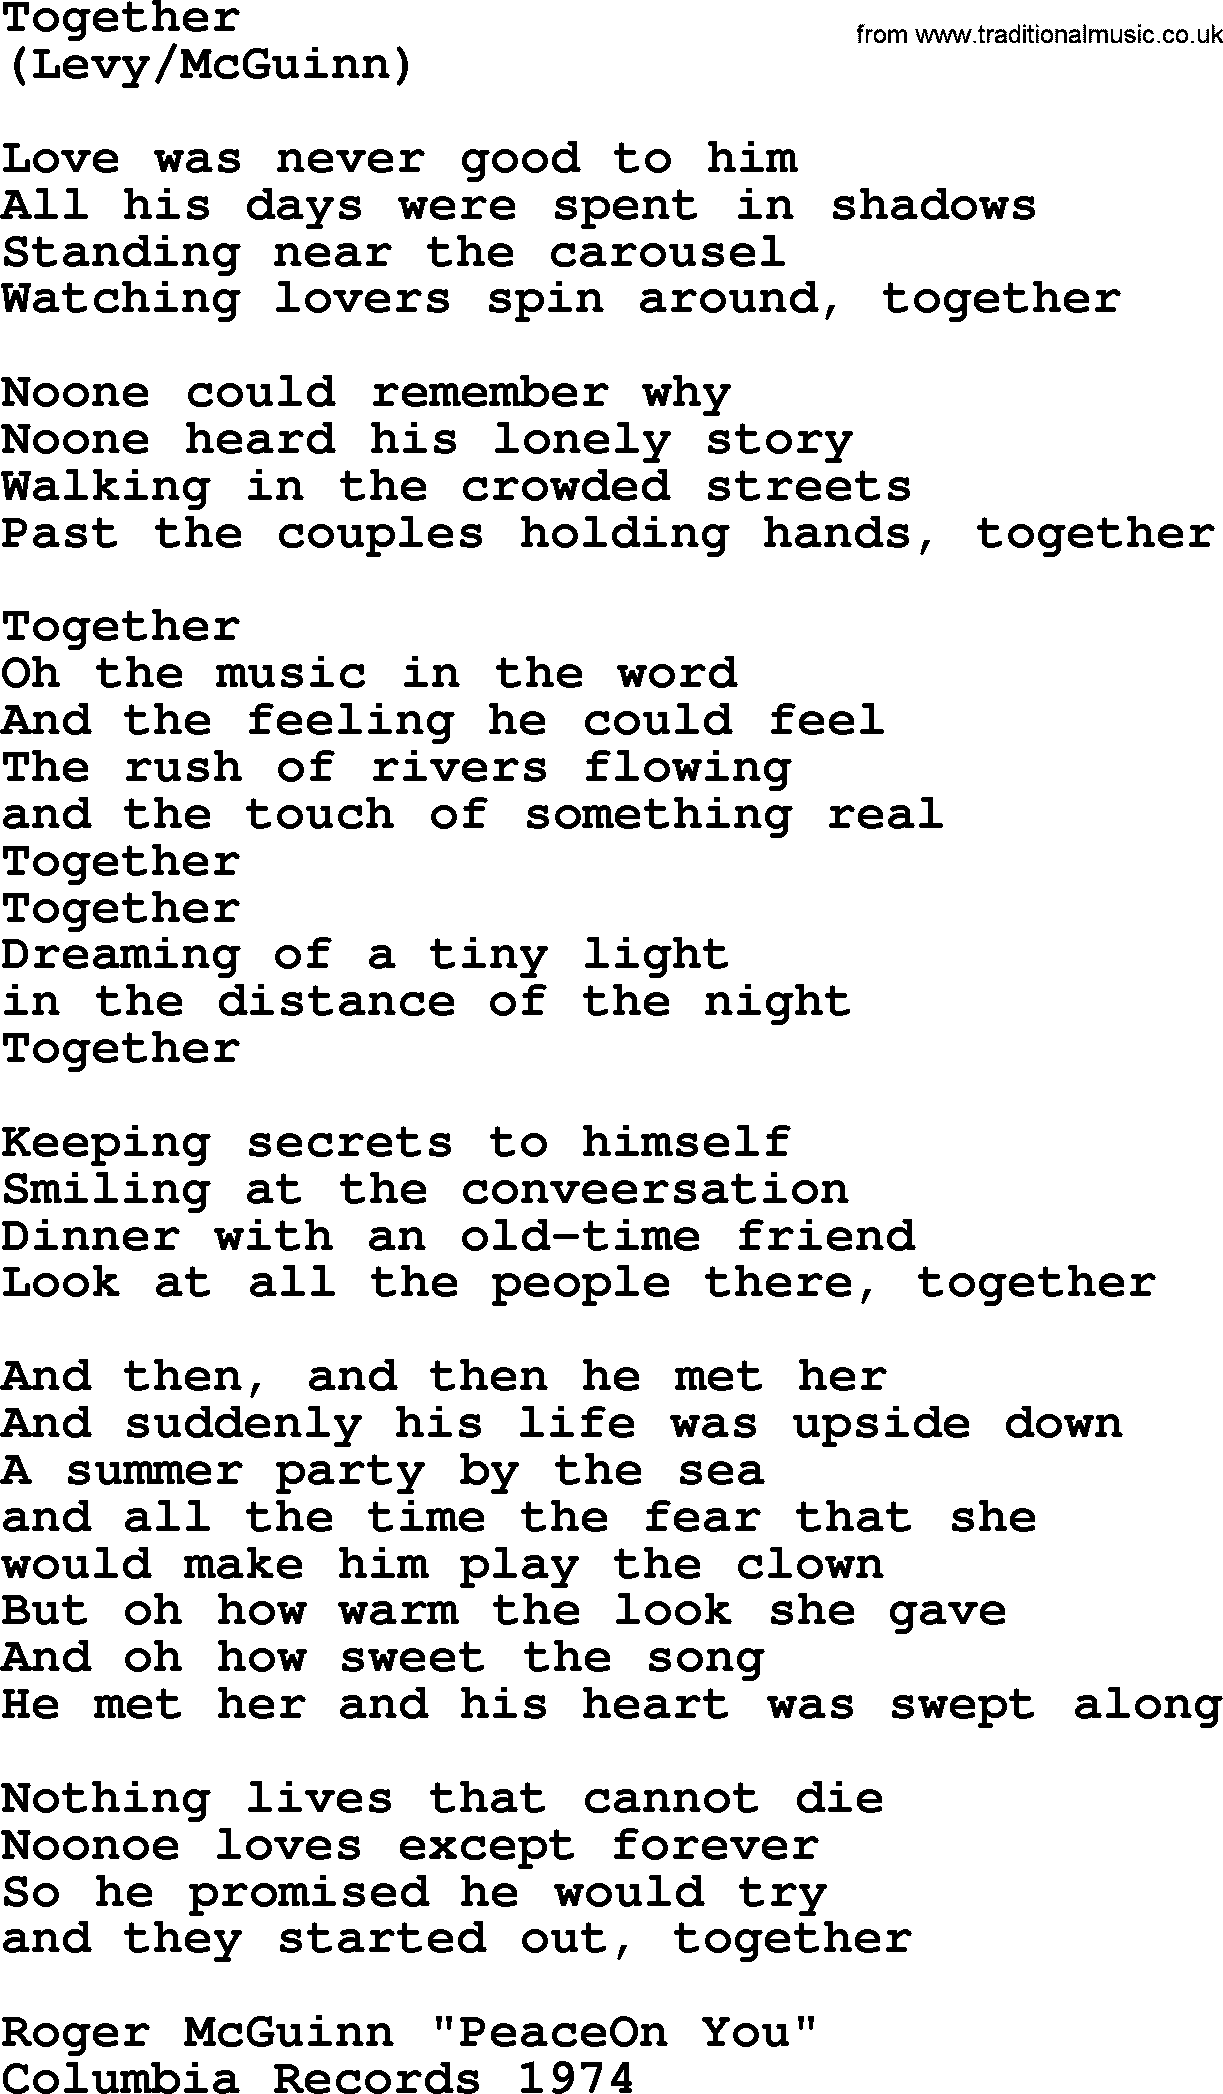 The Byrds song Together, lyrics